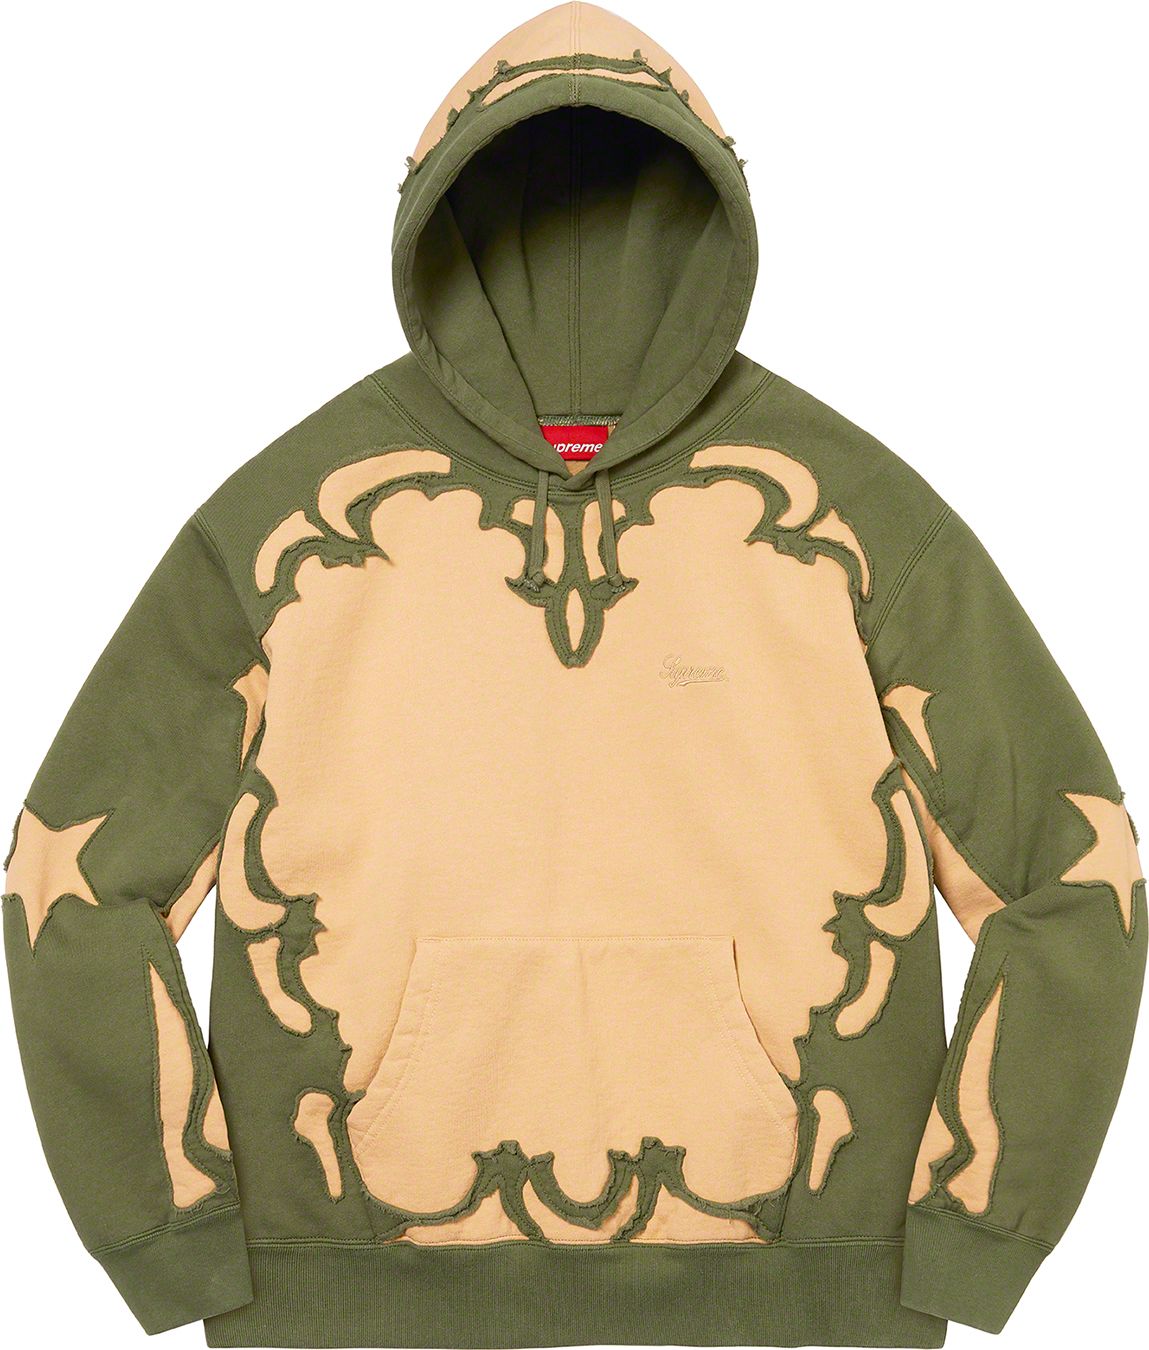 supreme hoodie price